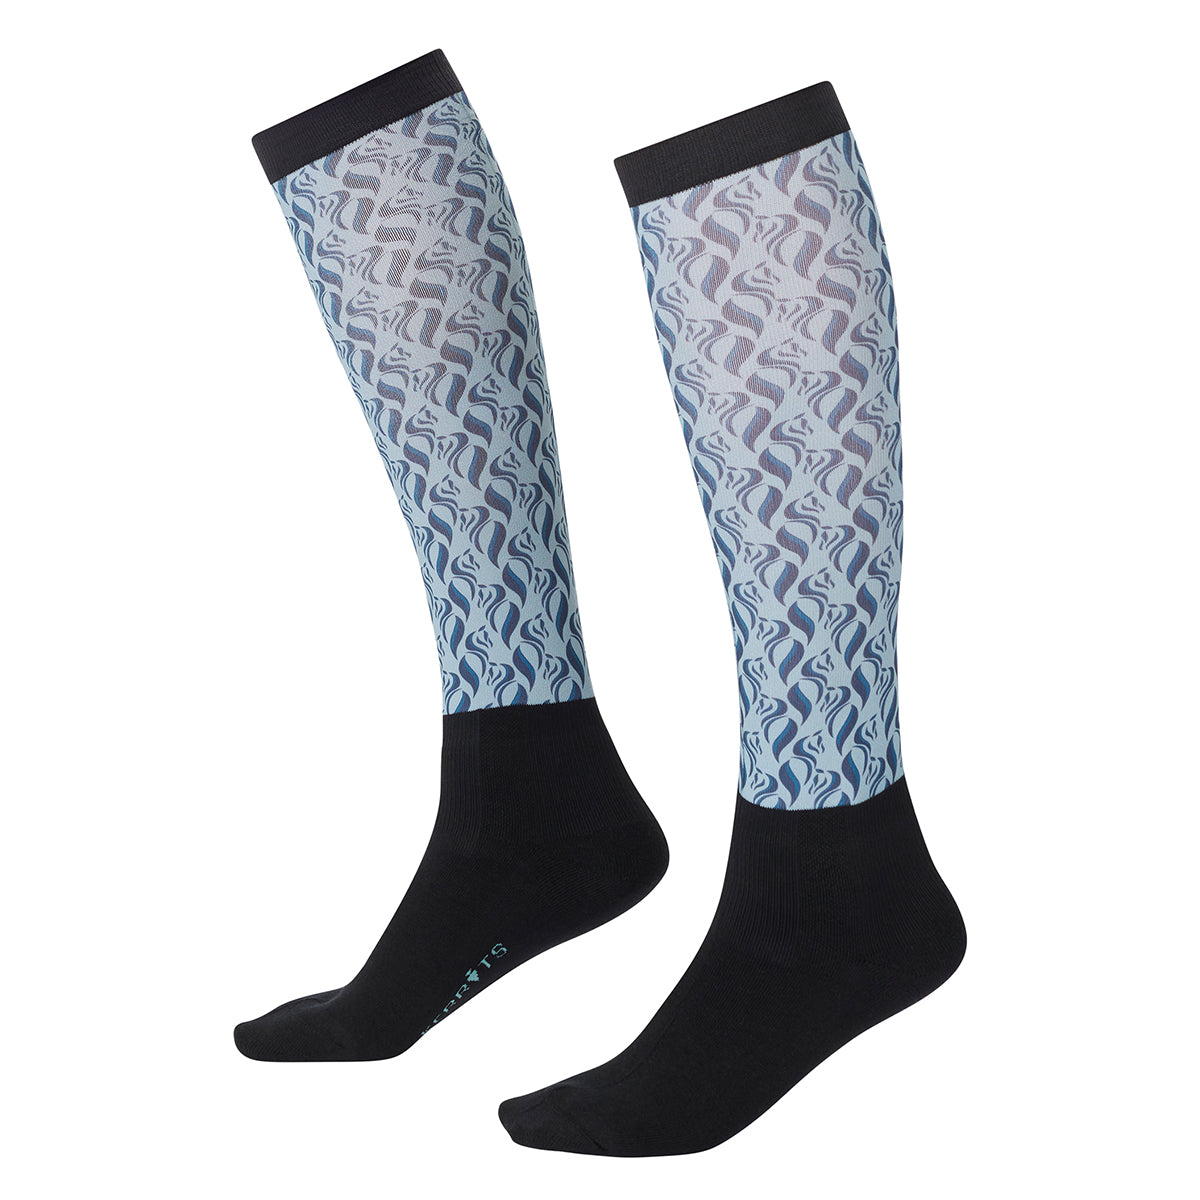 Kerrits Women's Dual Zone Boot Socks